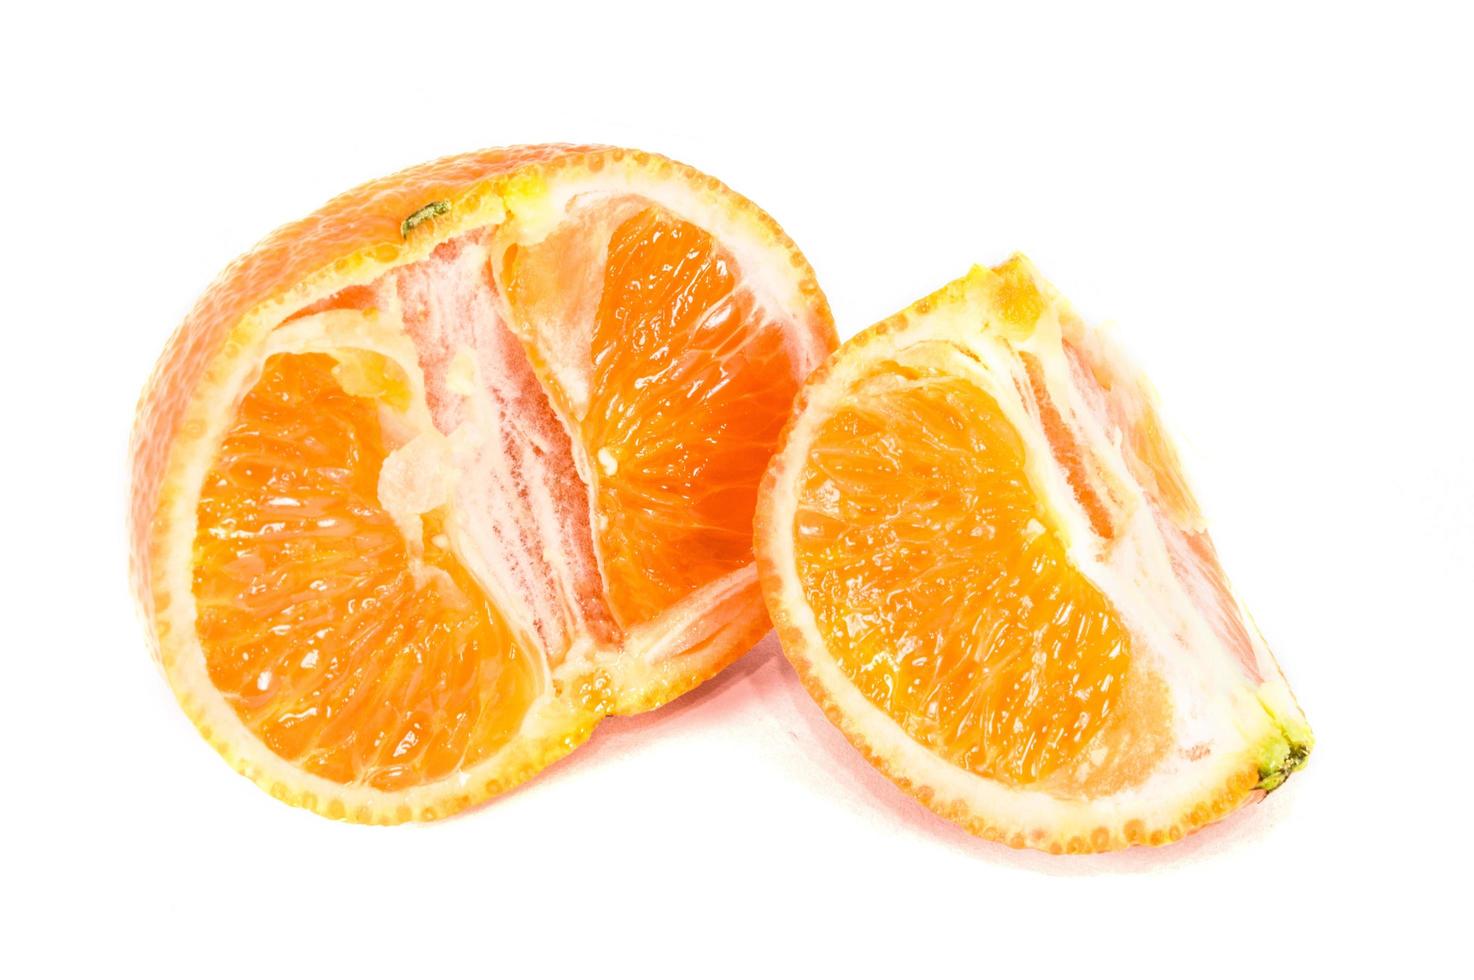 laranja tangerina casca de tangerina ou fatia de tangerina isolada no fundo branco foto